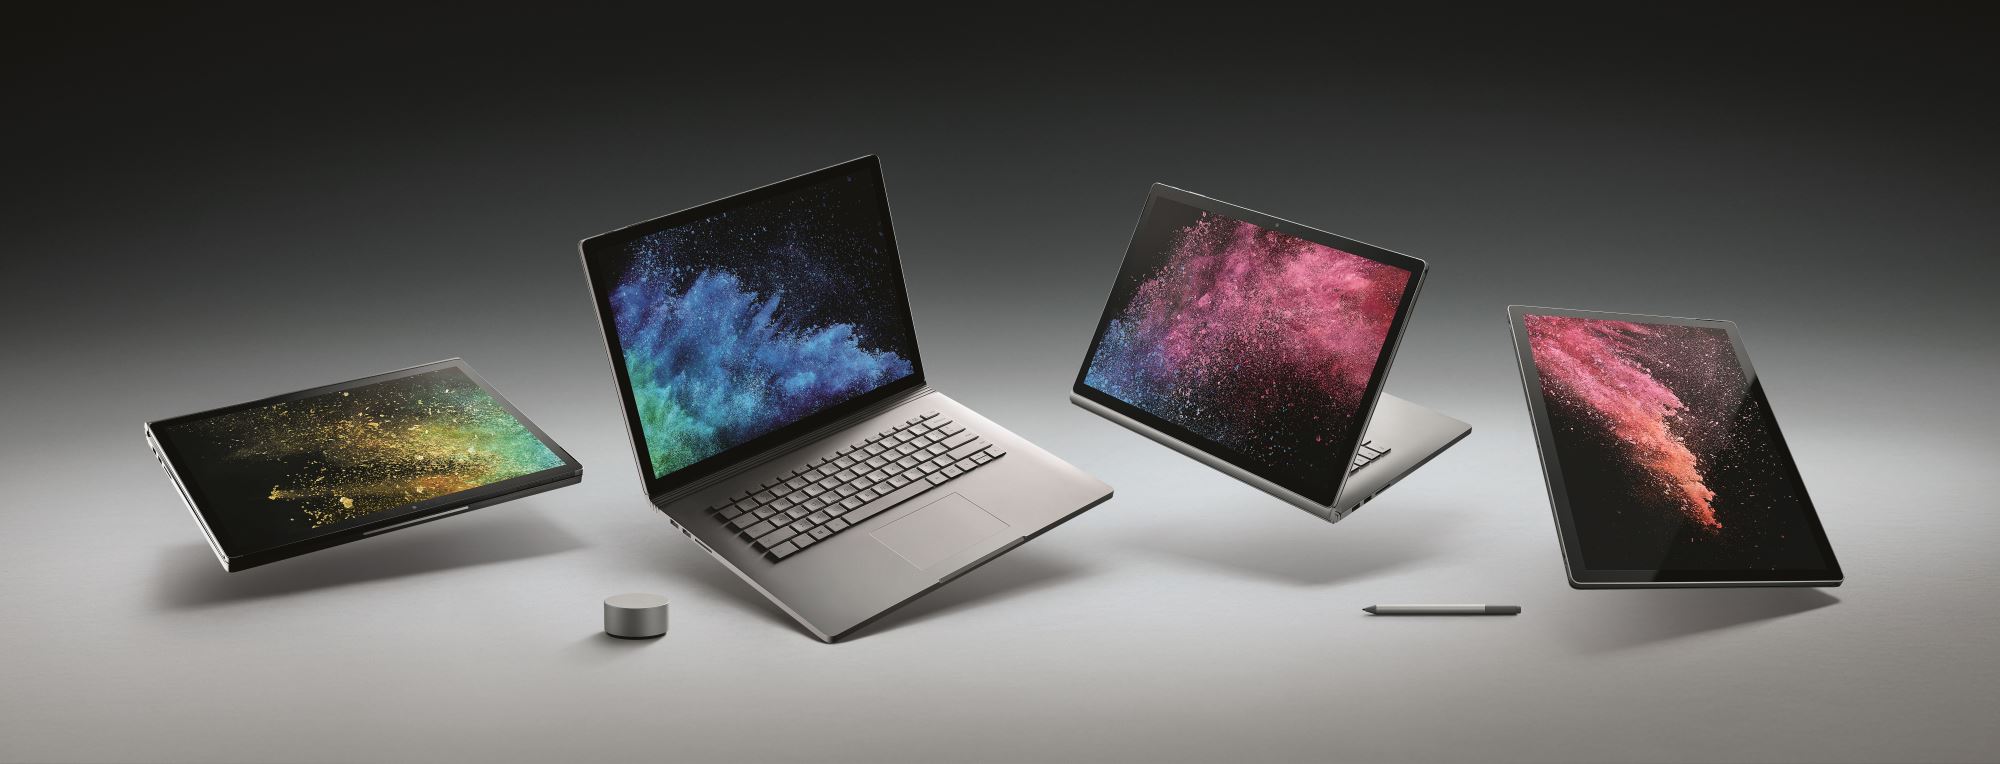 Microsoft Introduces Surface Book 2: 7th/8th Generation i5/i7 CPUS, NVIDIA Discrete Graphics